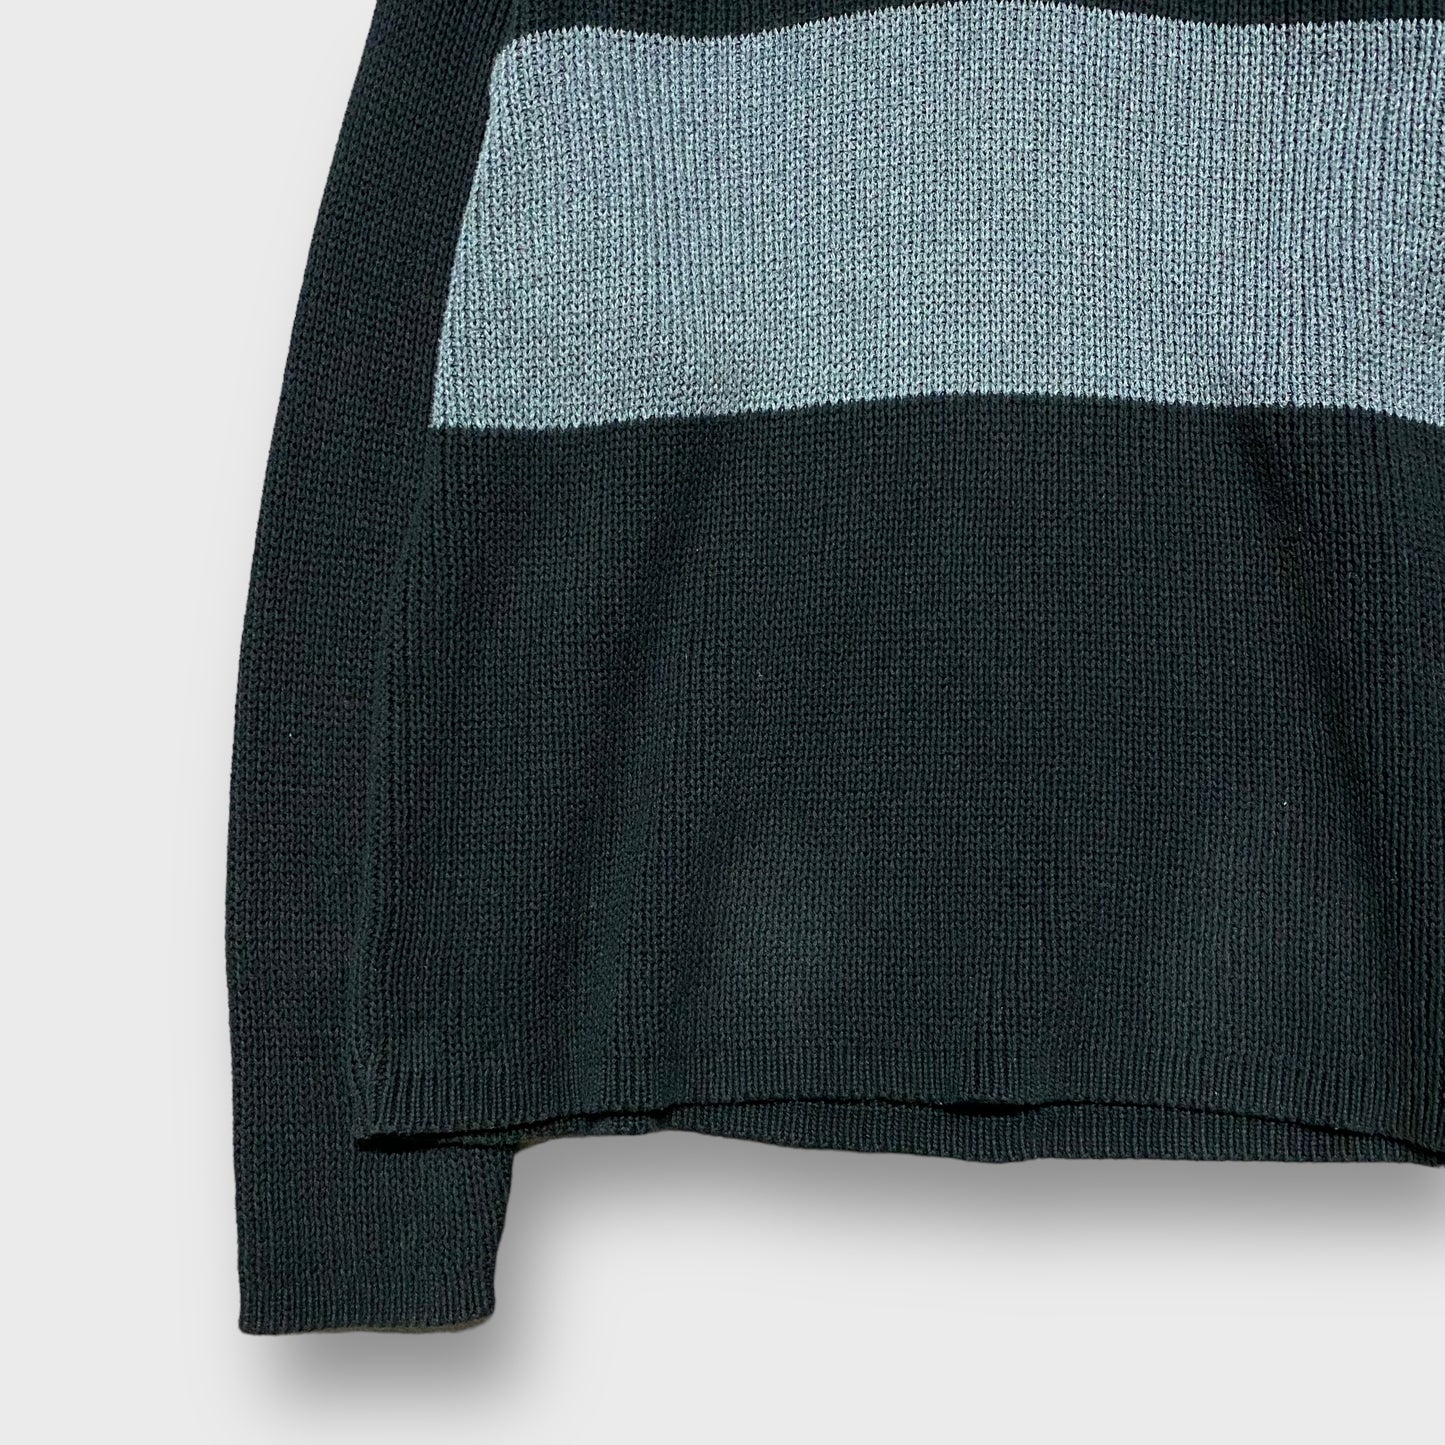 90's "GAP" Border design ridge knit sweater